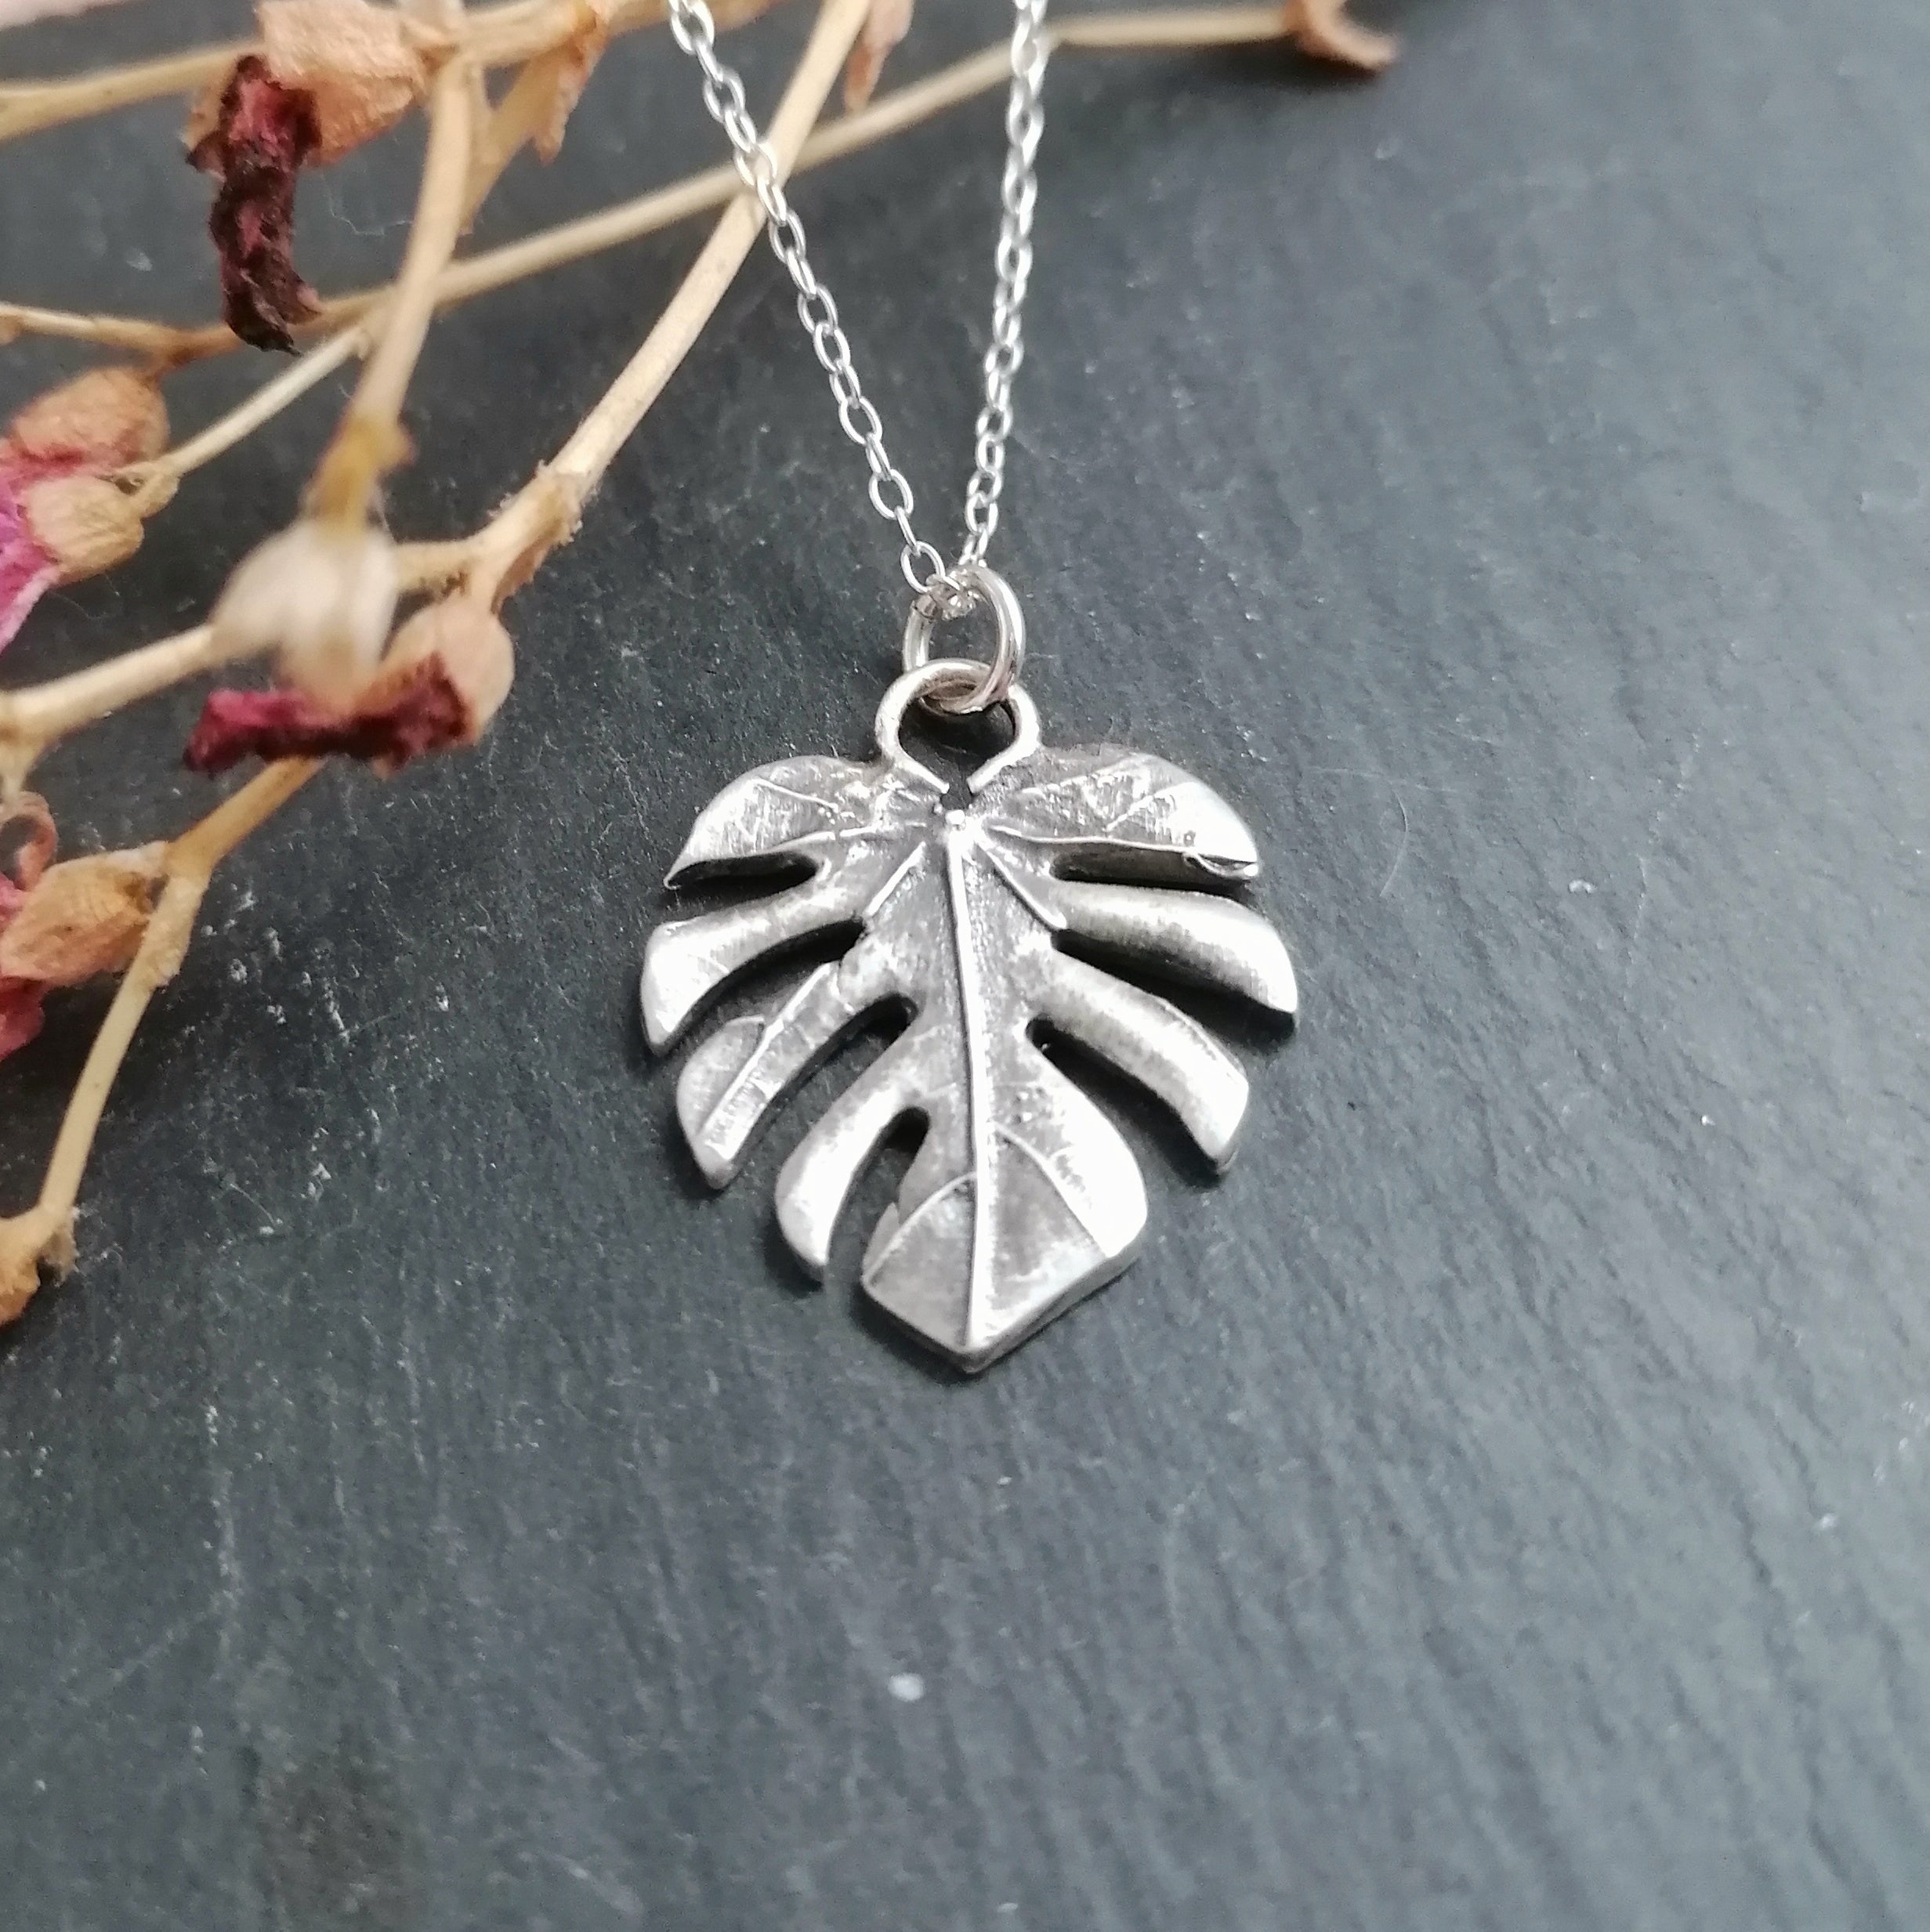 Monstera leaf pendant necklace using Shrink Plastic | Sizzix Blog